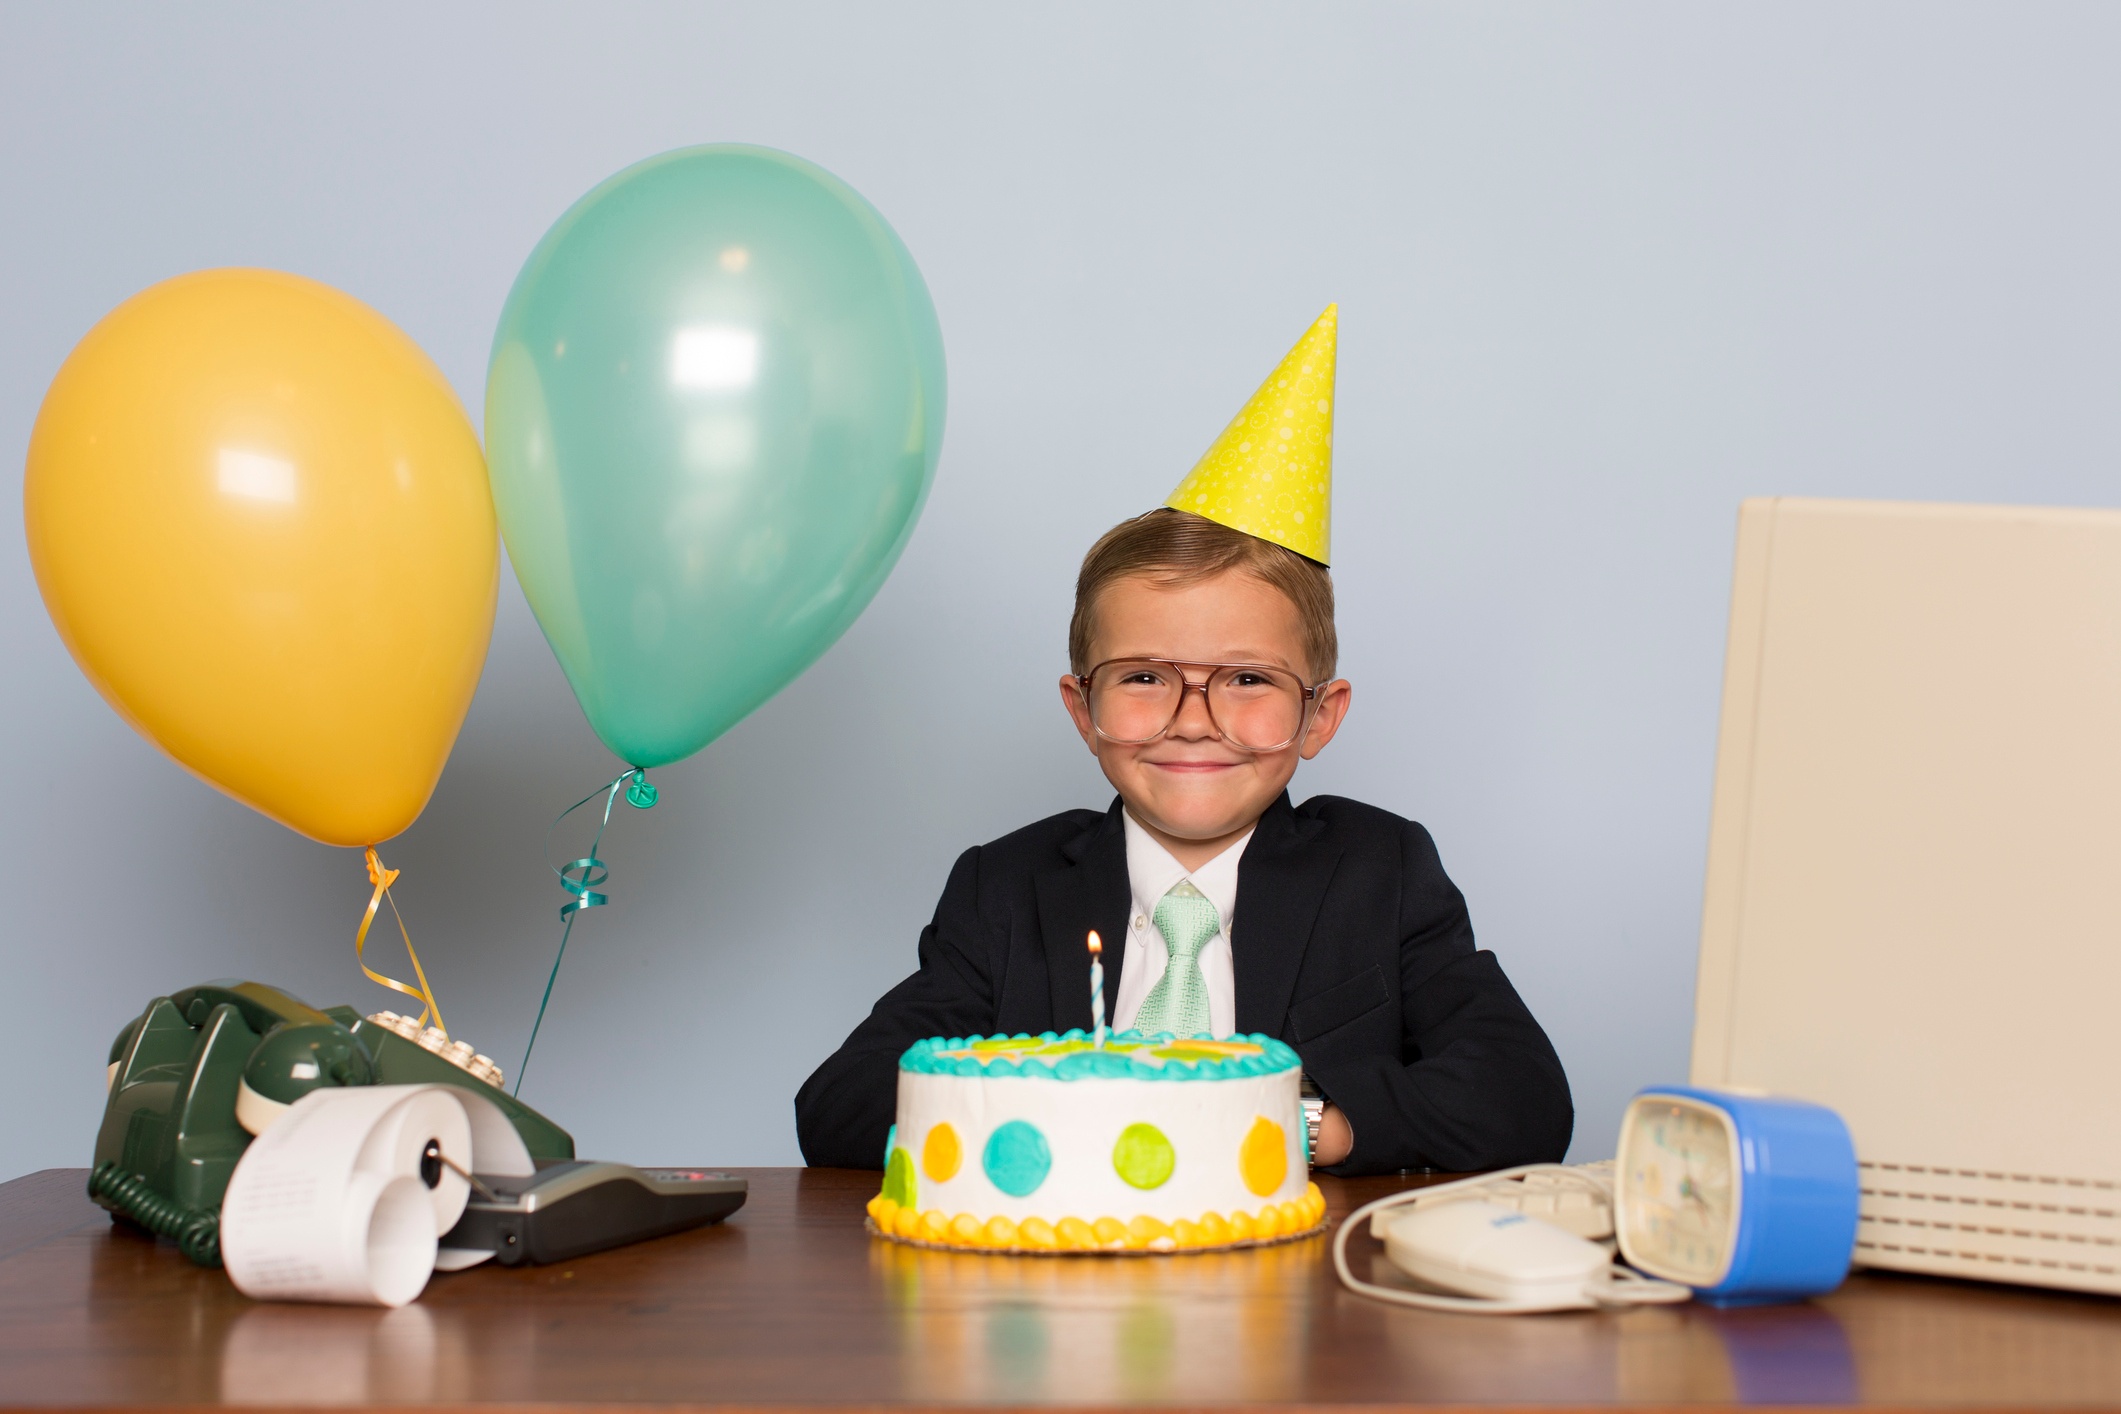 How to Celebrate Birthdays at Work 101